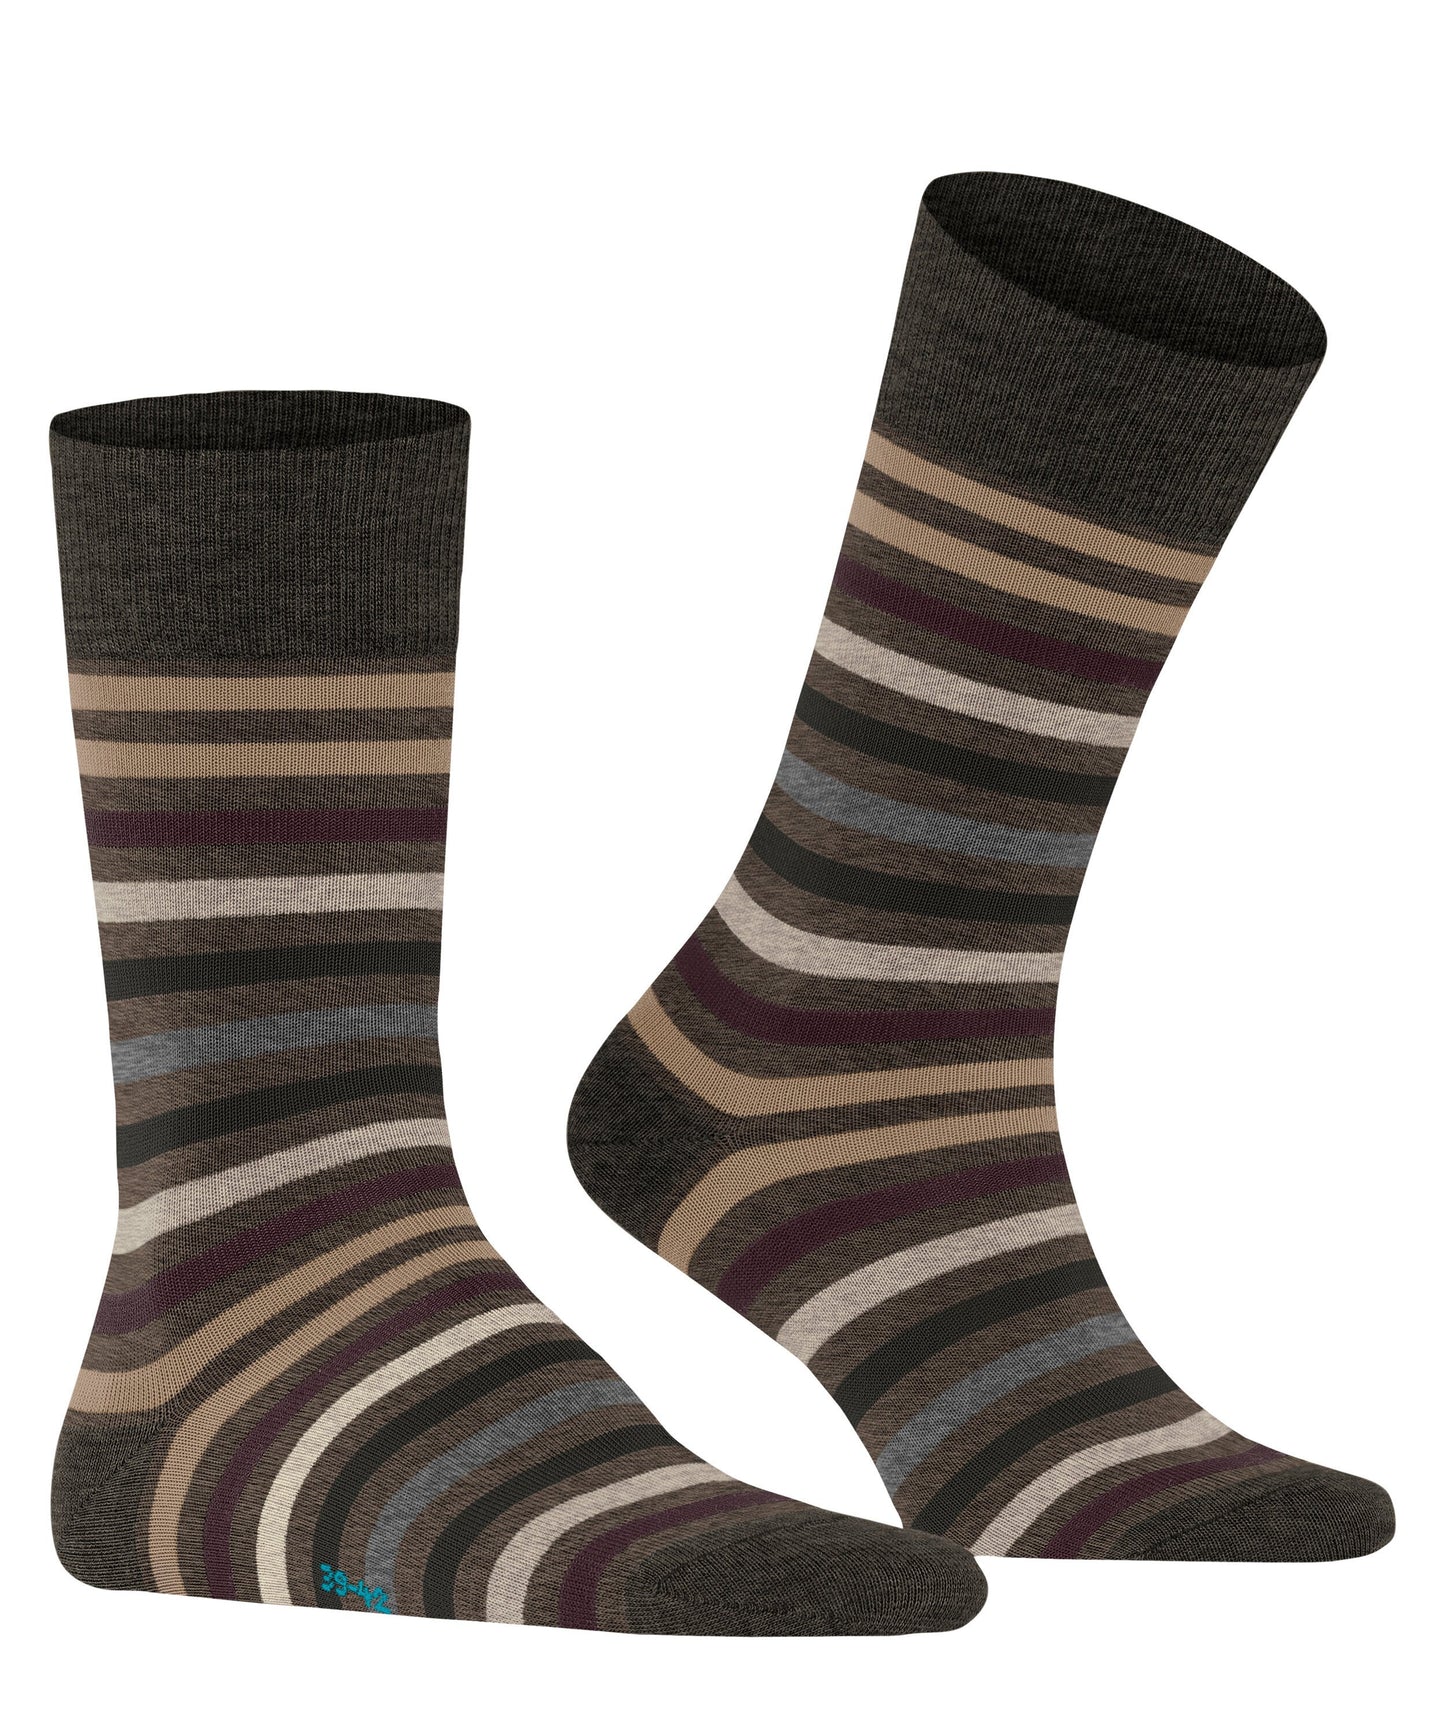 FALKE Tinted Stripe Herren Socken (Beech)